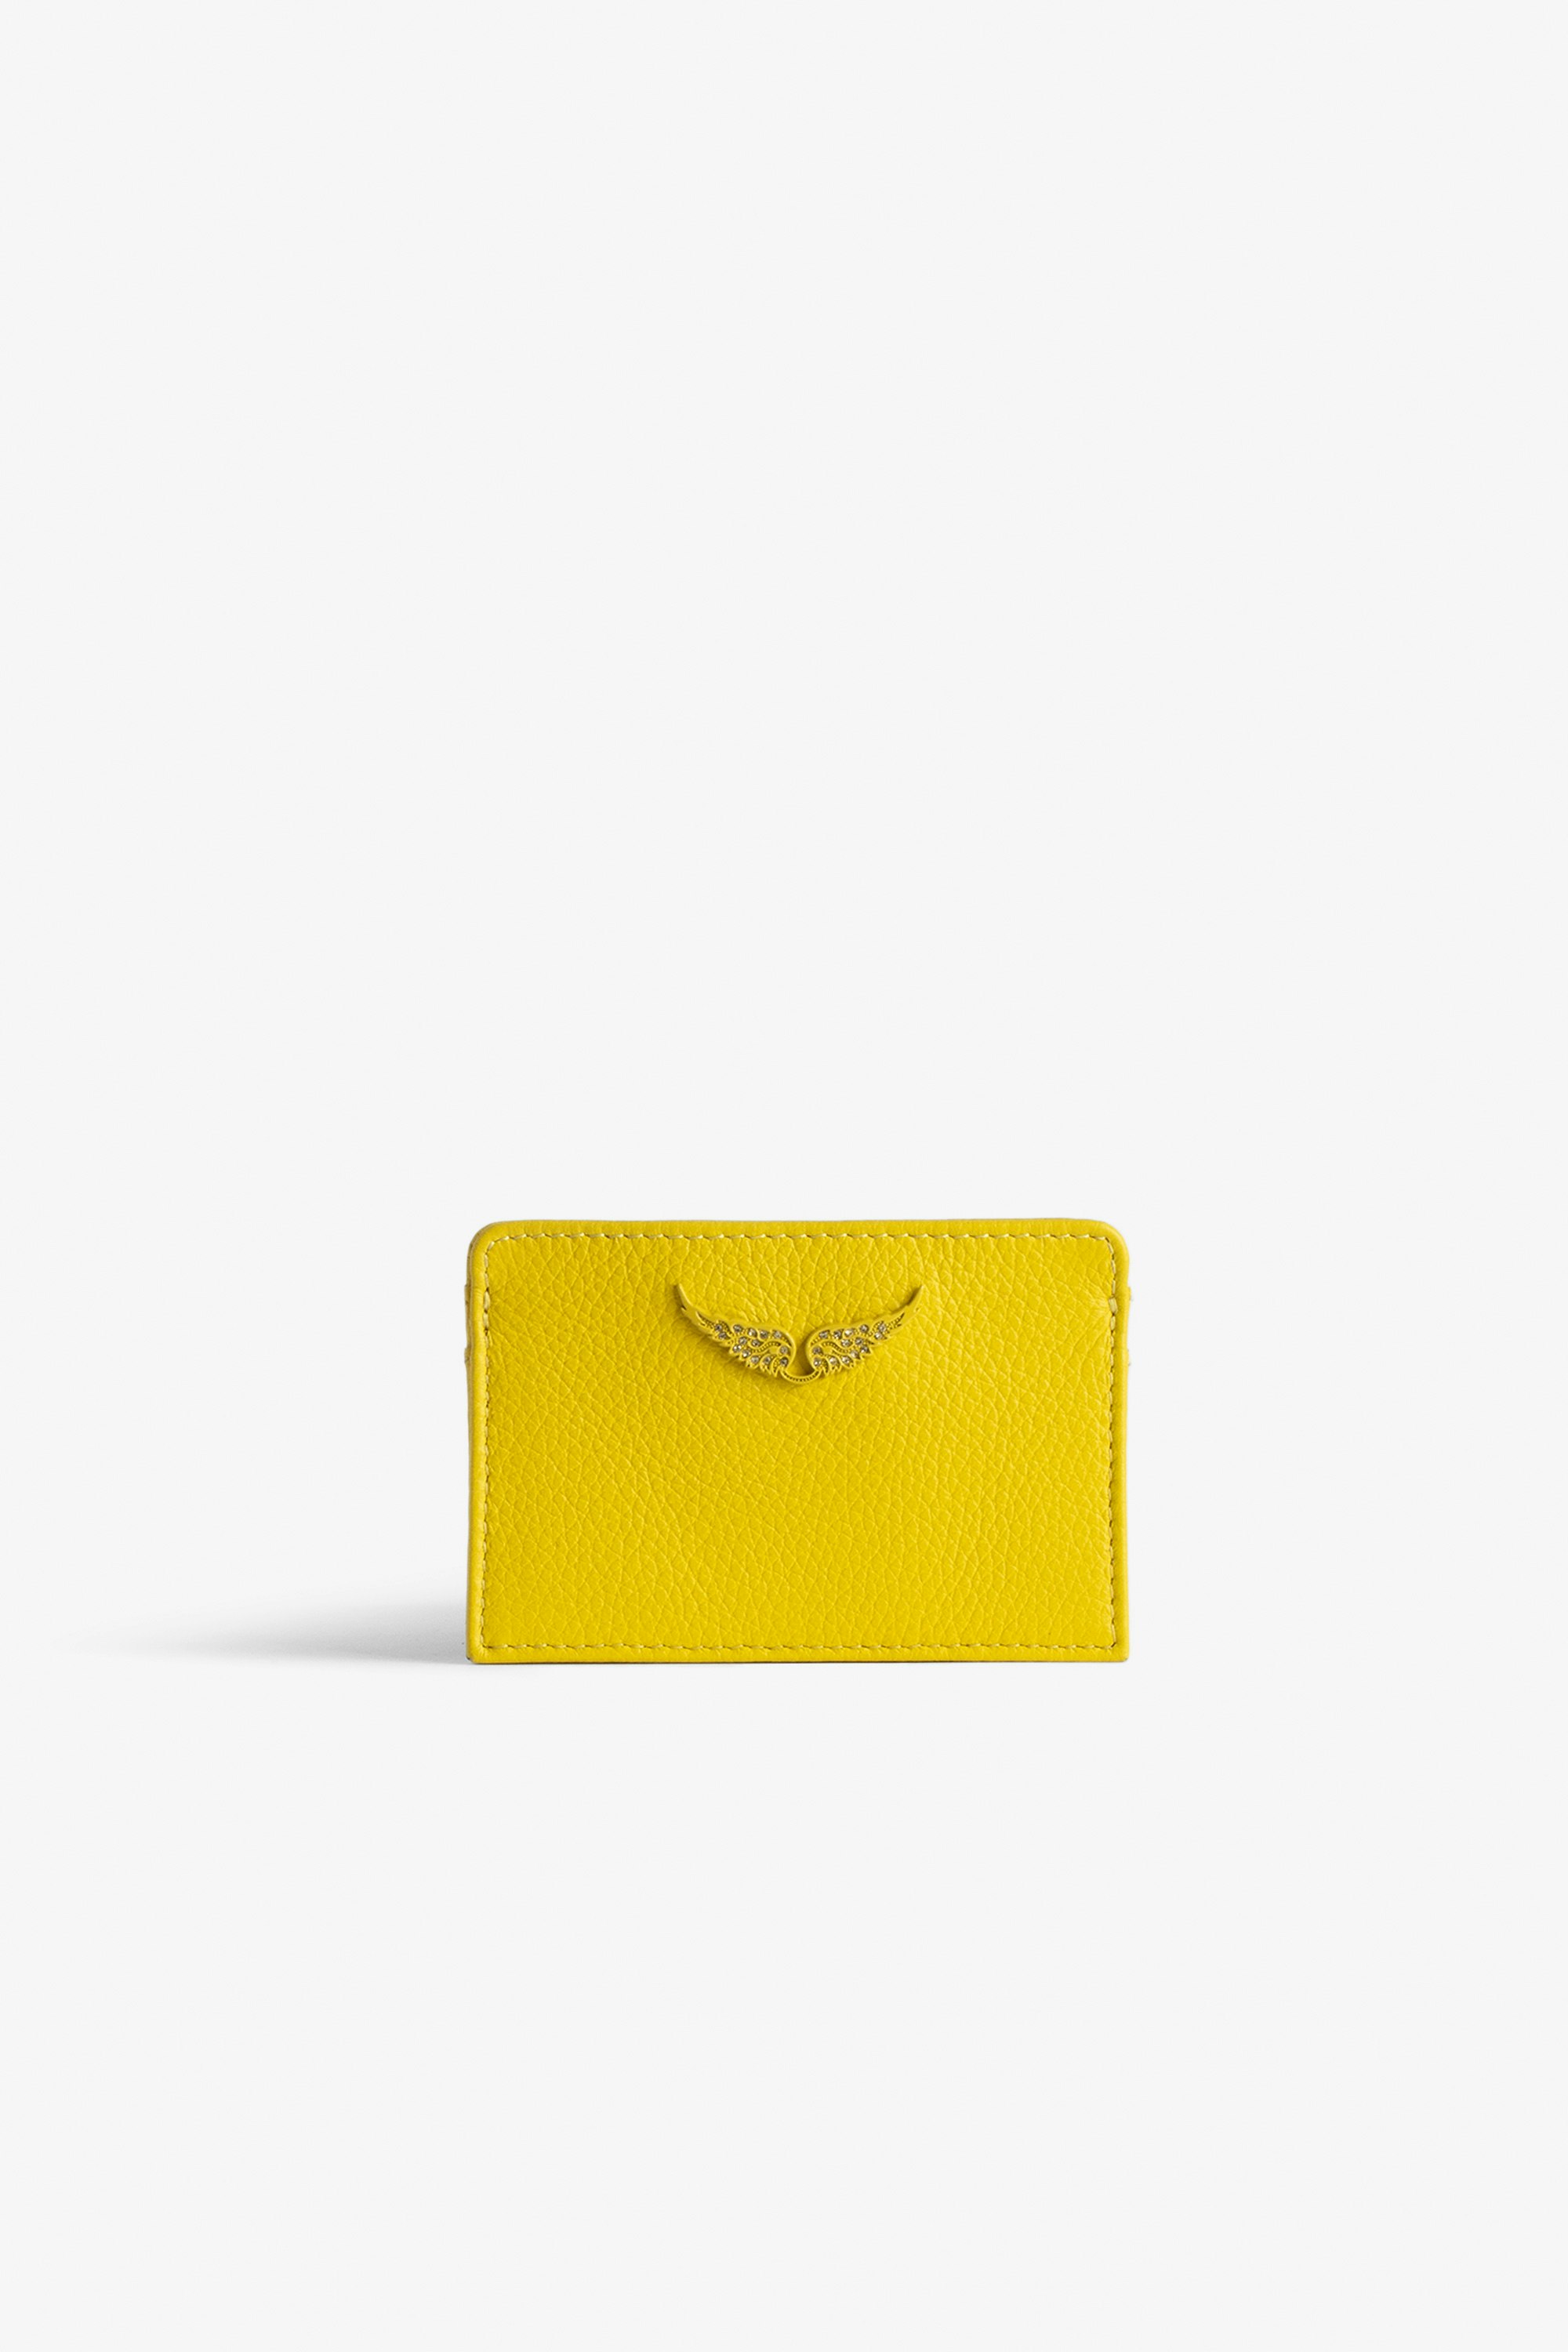 Portacarte ZV Pass Portacarte in pelle granulata giallo con charm ali in strass da donna.